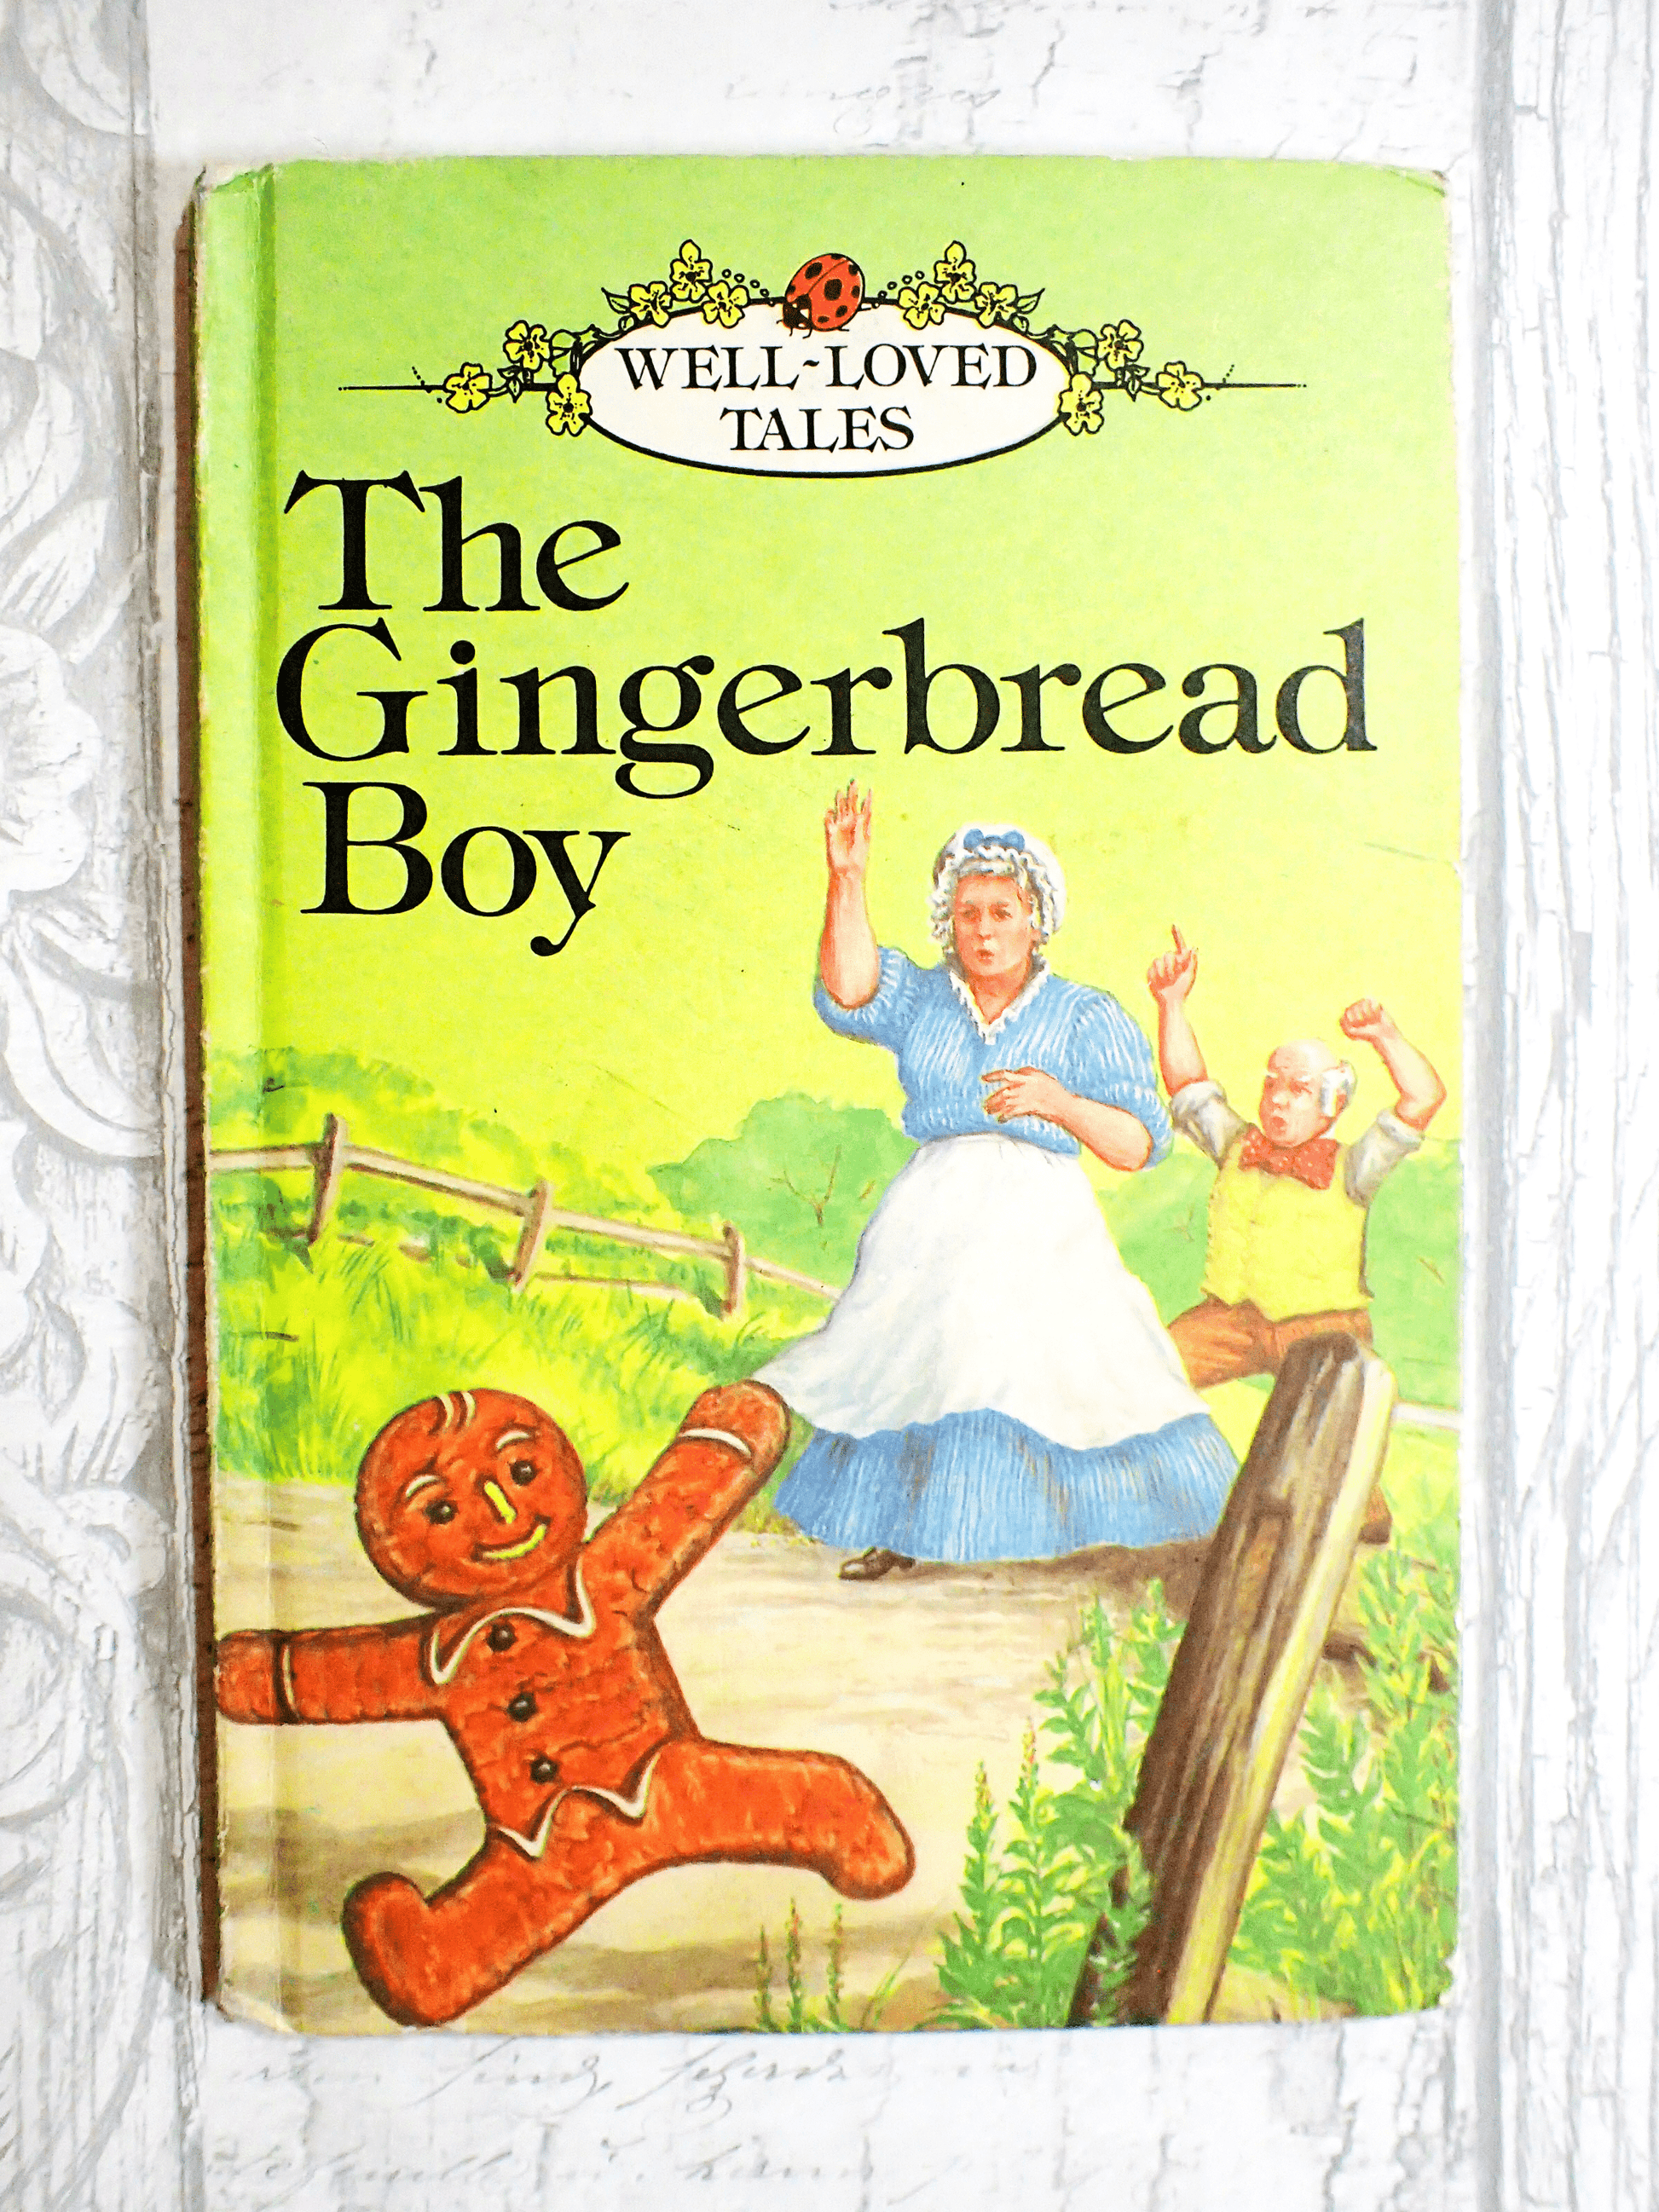 Vintage Ladybird Children's book The Gingerbread Boy against pale grey background. 